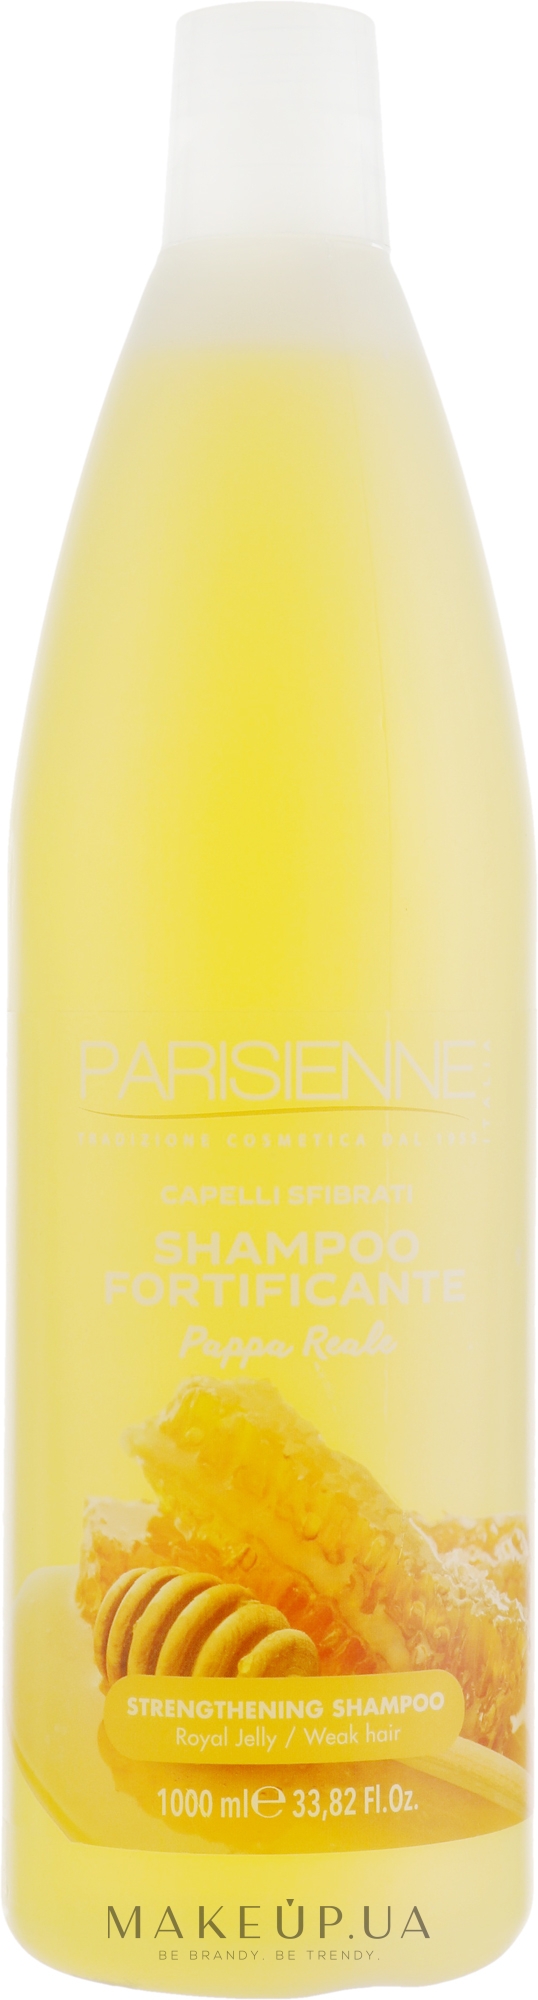 Шампунь "Укрепляющий" - Parisienne Italia Strengthening Shampoo — фото 1000ml